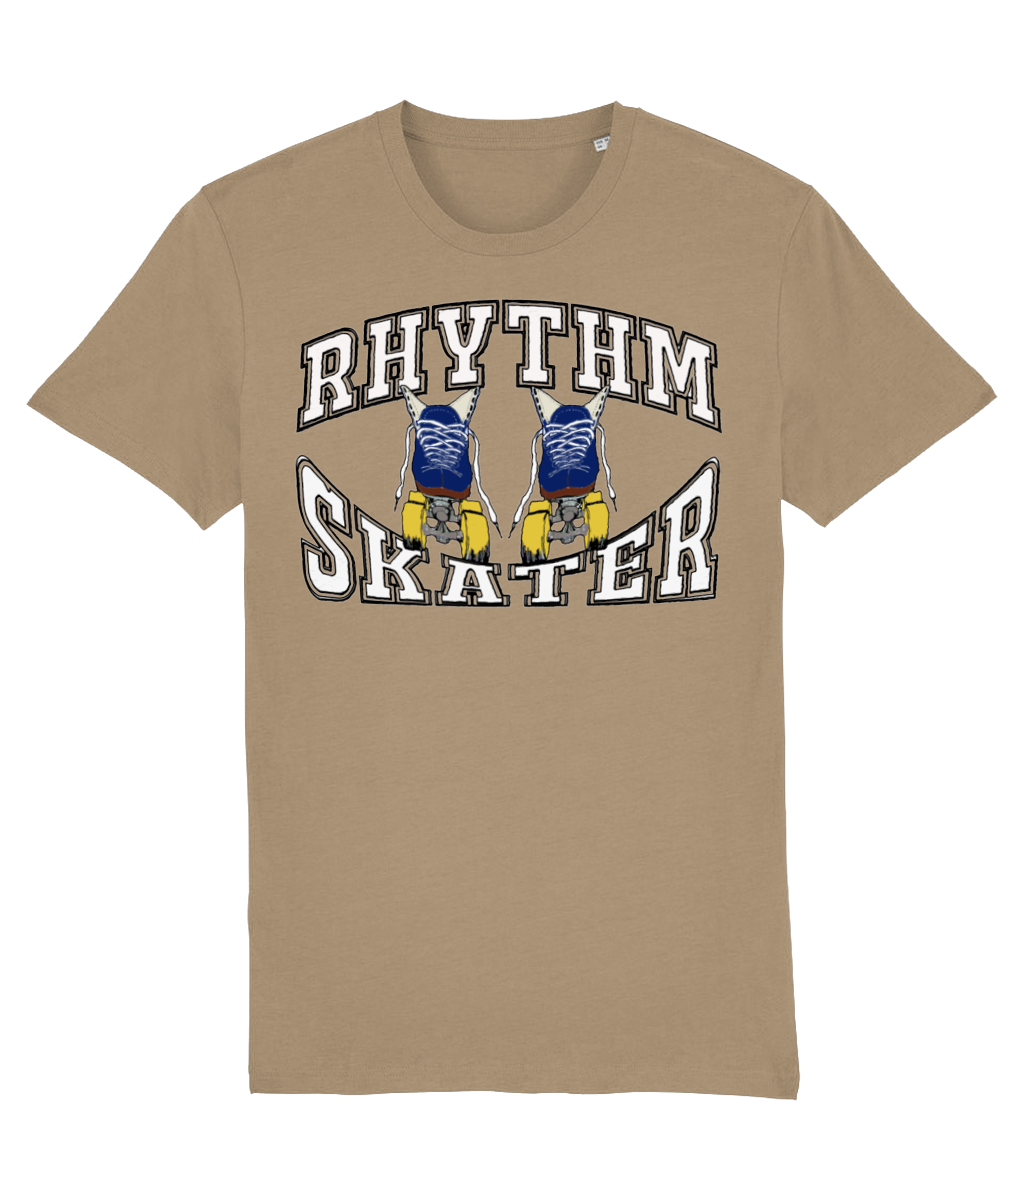 Tshirt rhythm skater-white blue